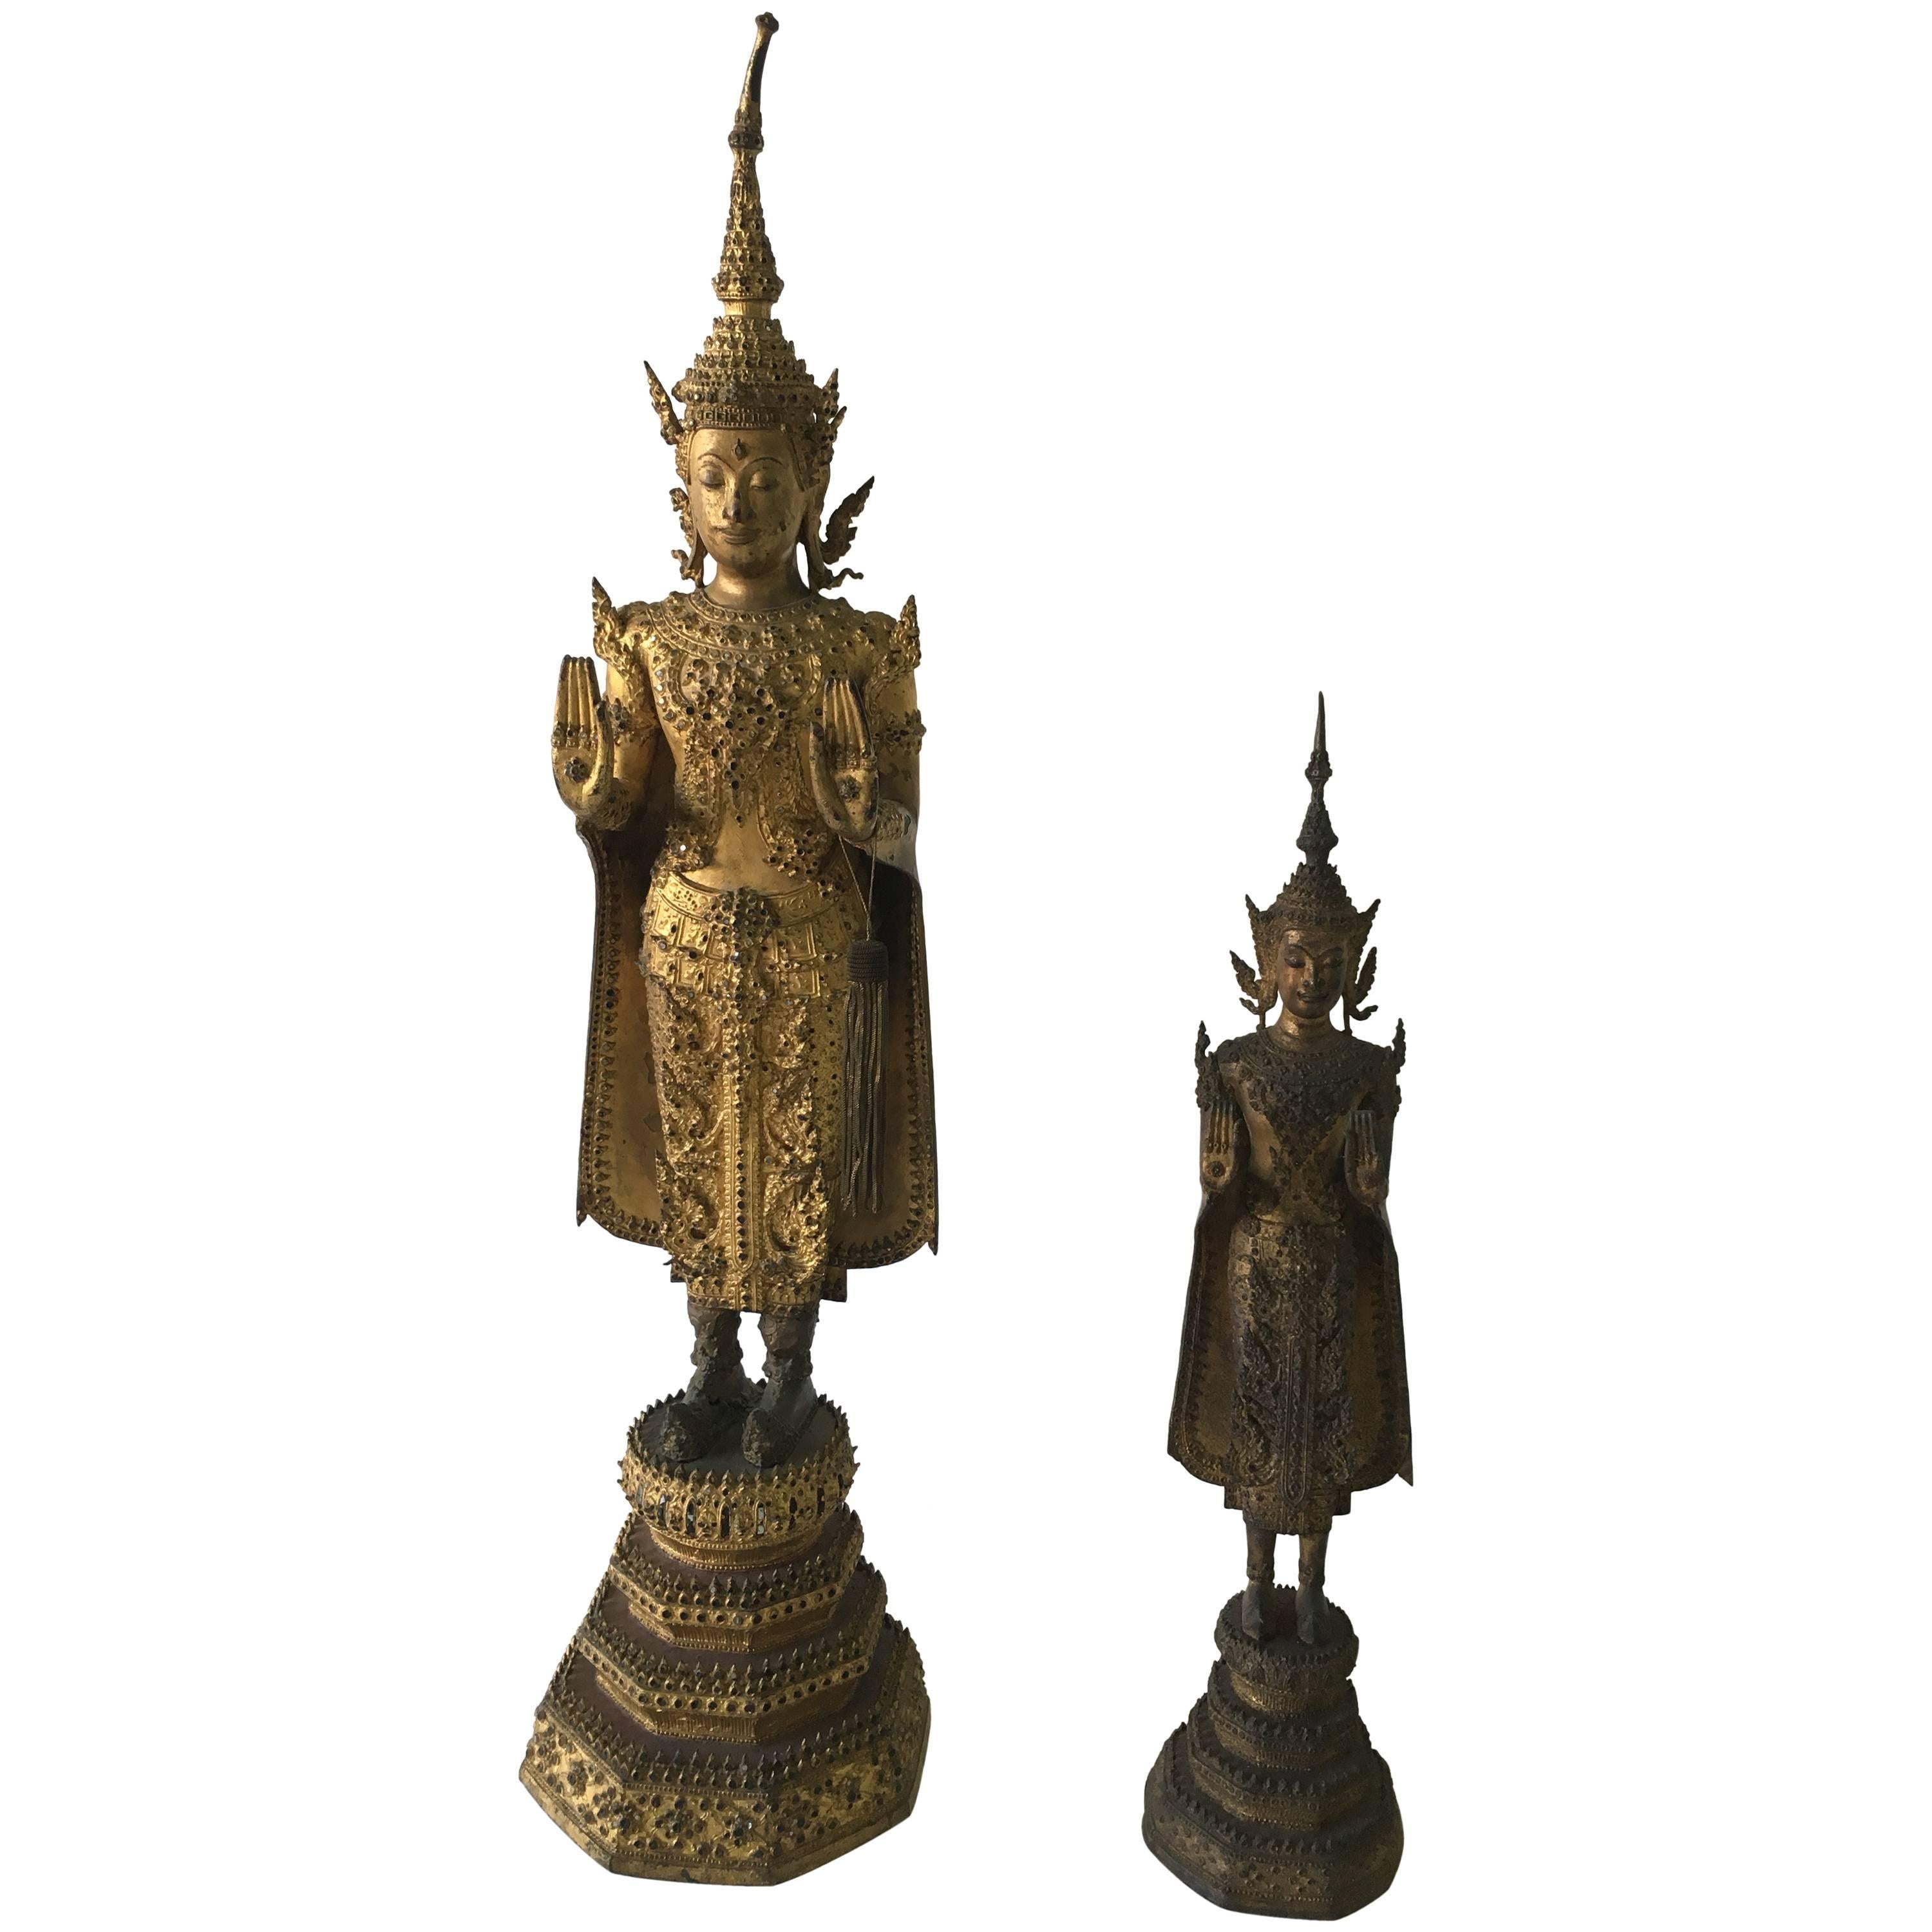 Antique Gilt Bronze Buddha Sculptures from Laos/Thailand